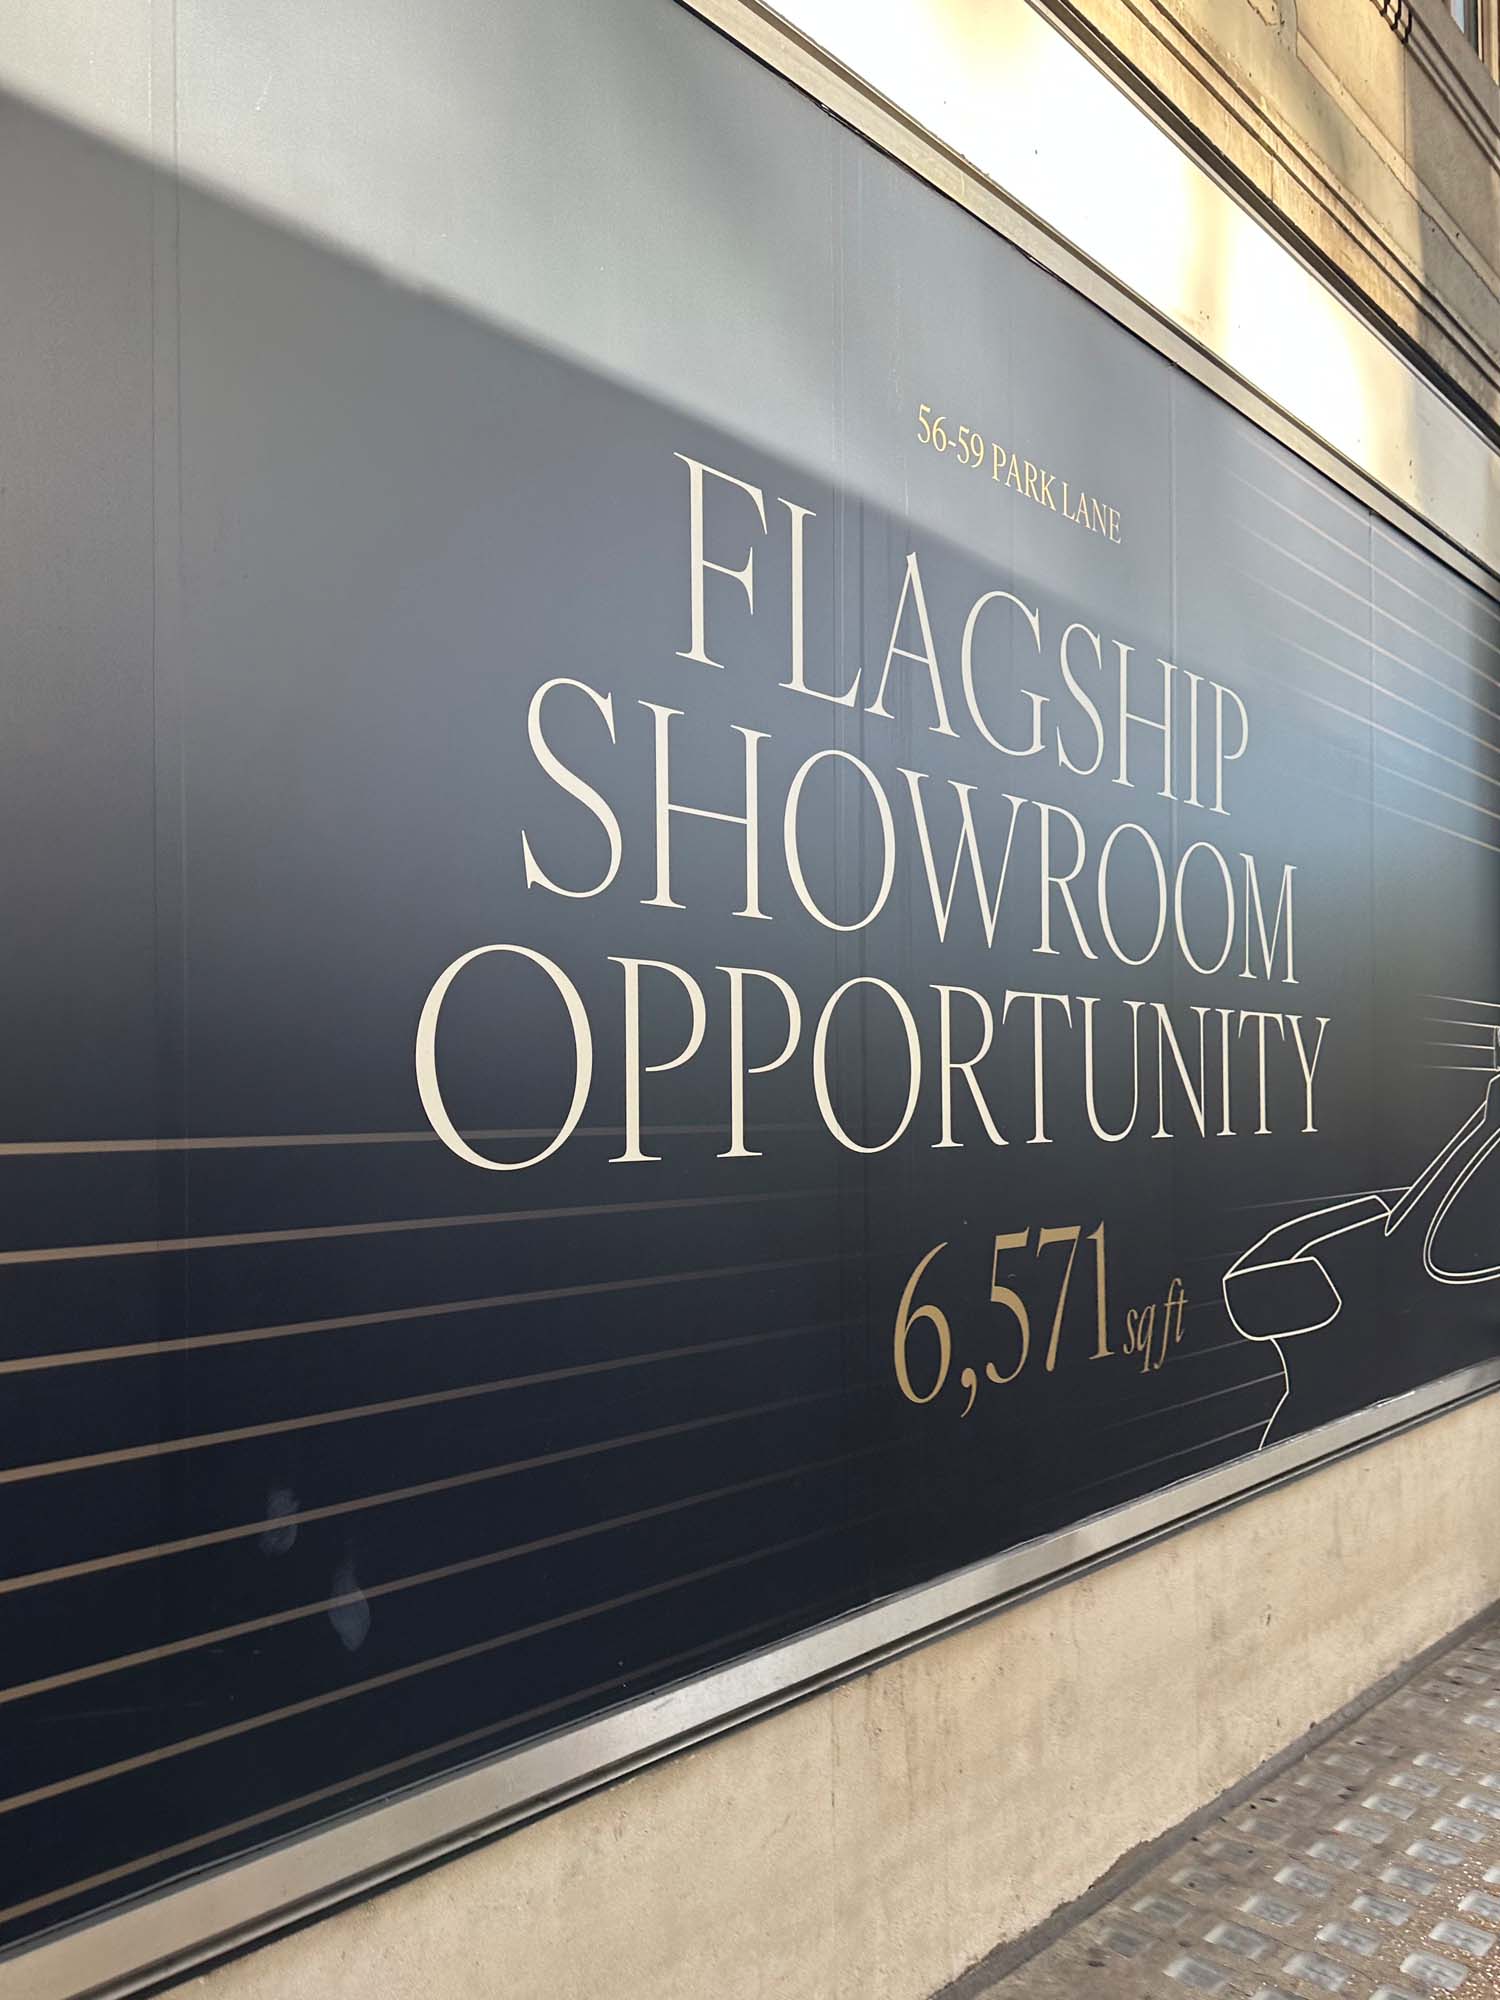 Flagship showroom opportunity on Park Lane